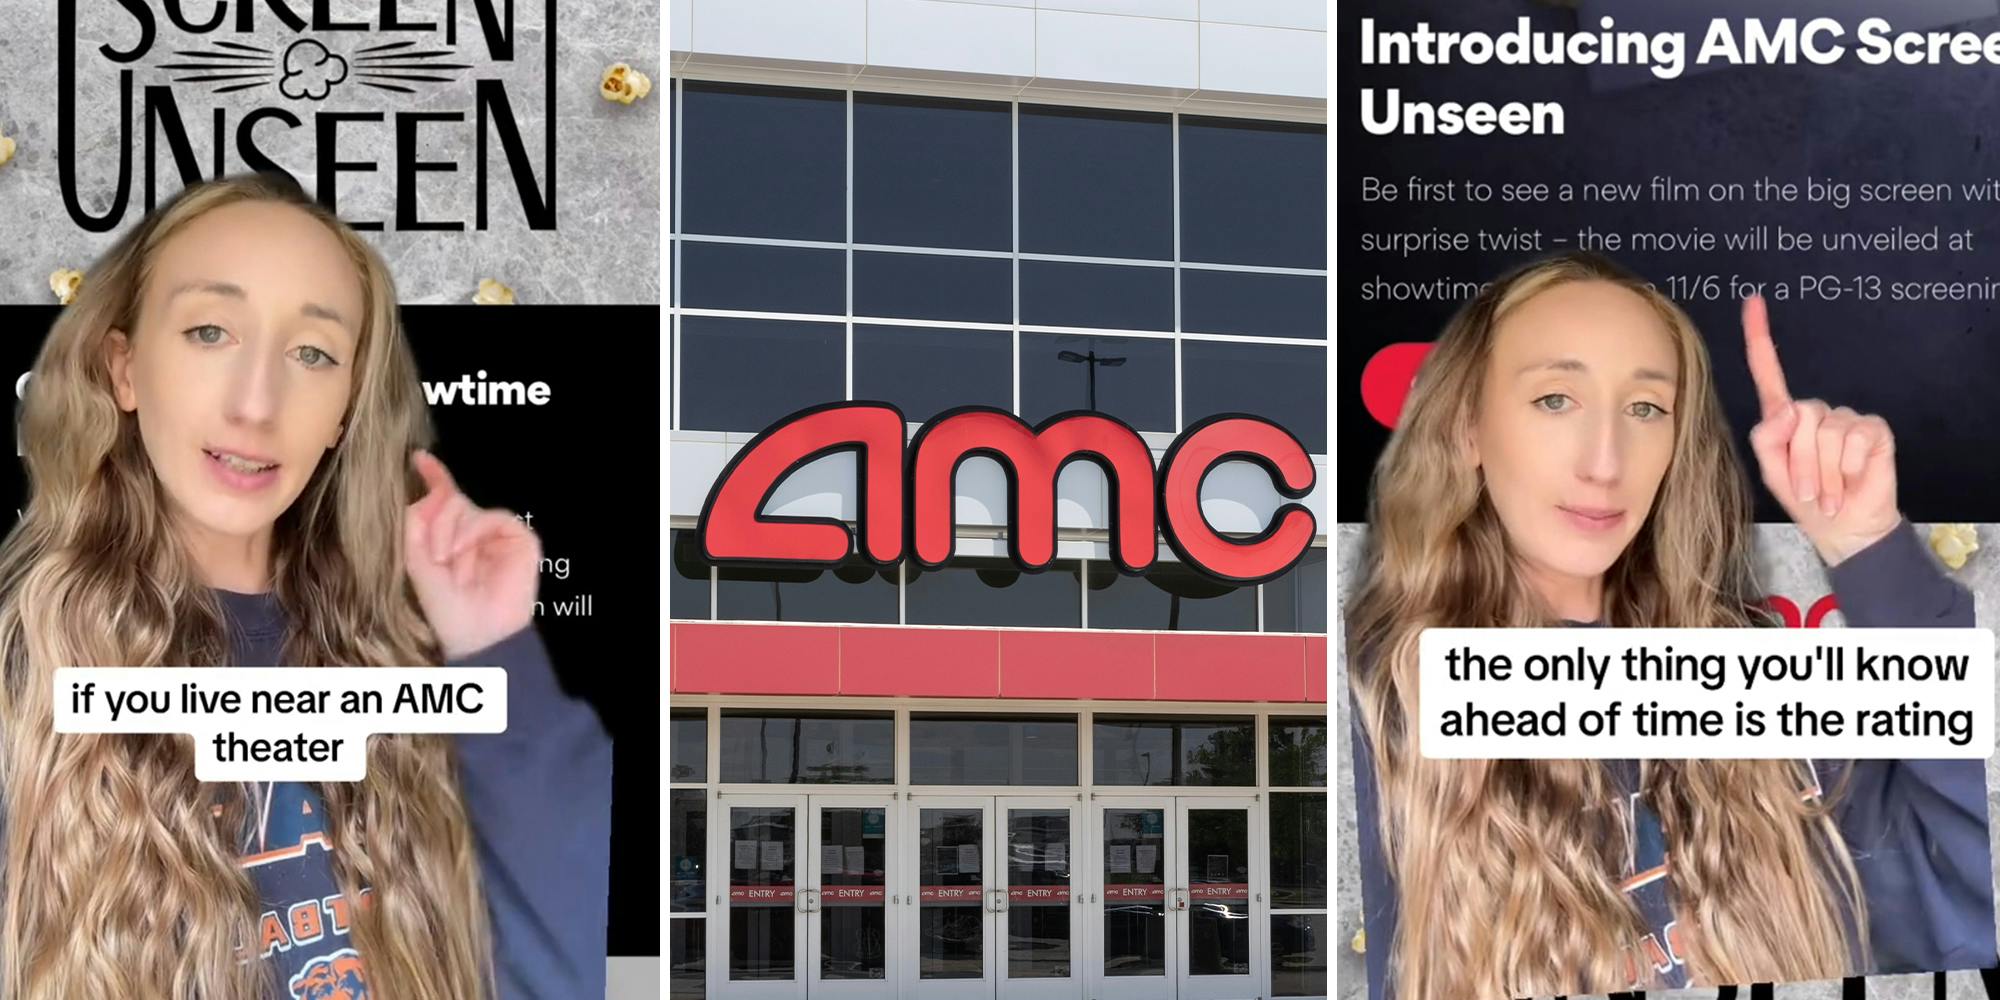 Woman explaining Amc Screen Unseen; AMC logo on building